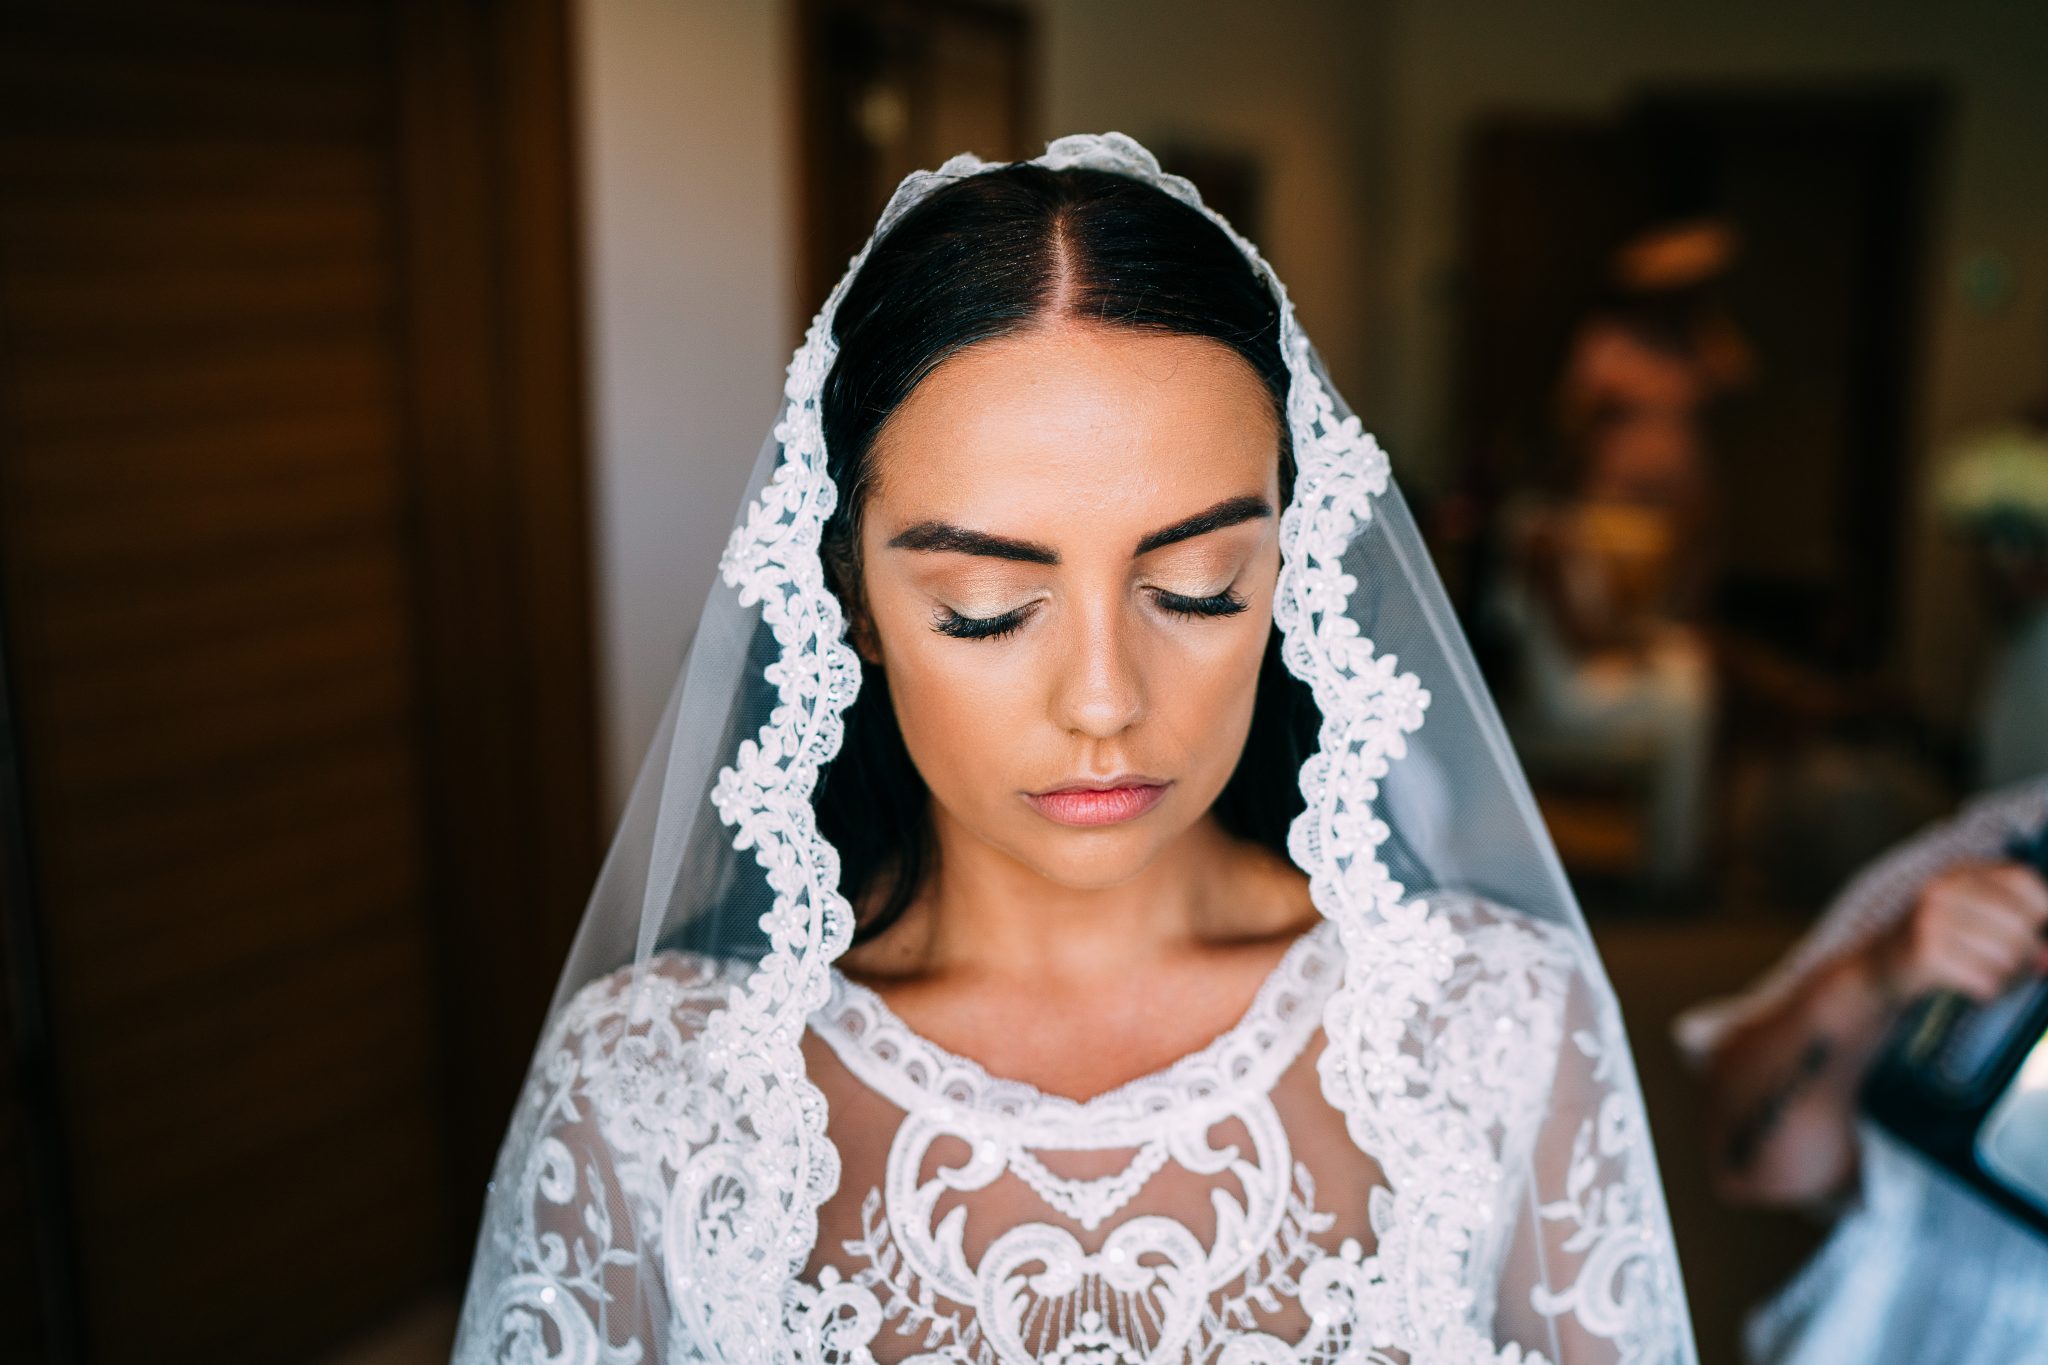 Anatomy of a Bride: Megan's Wedding Gown